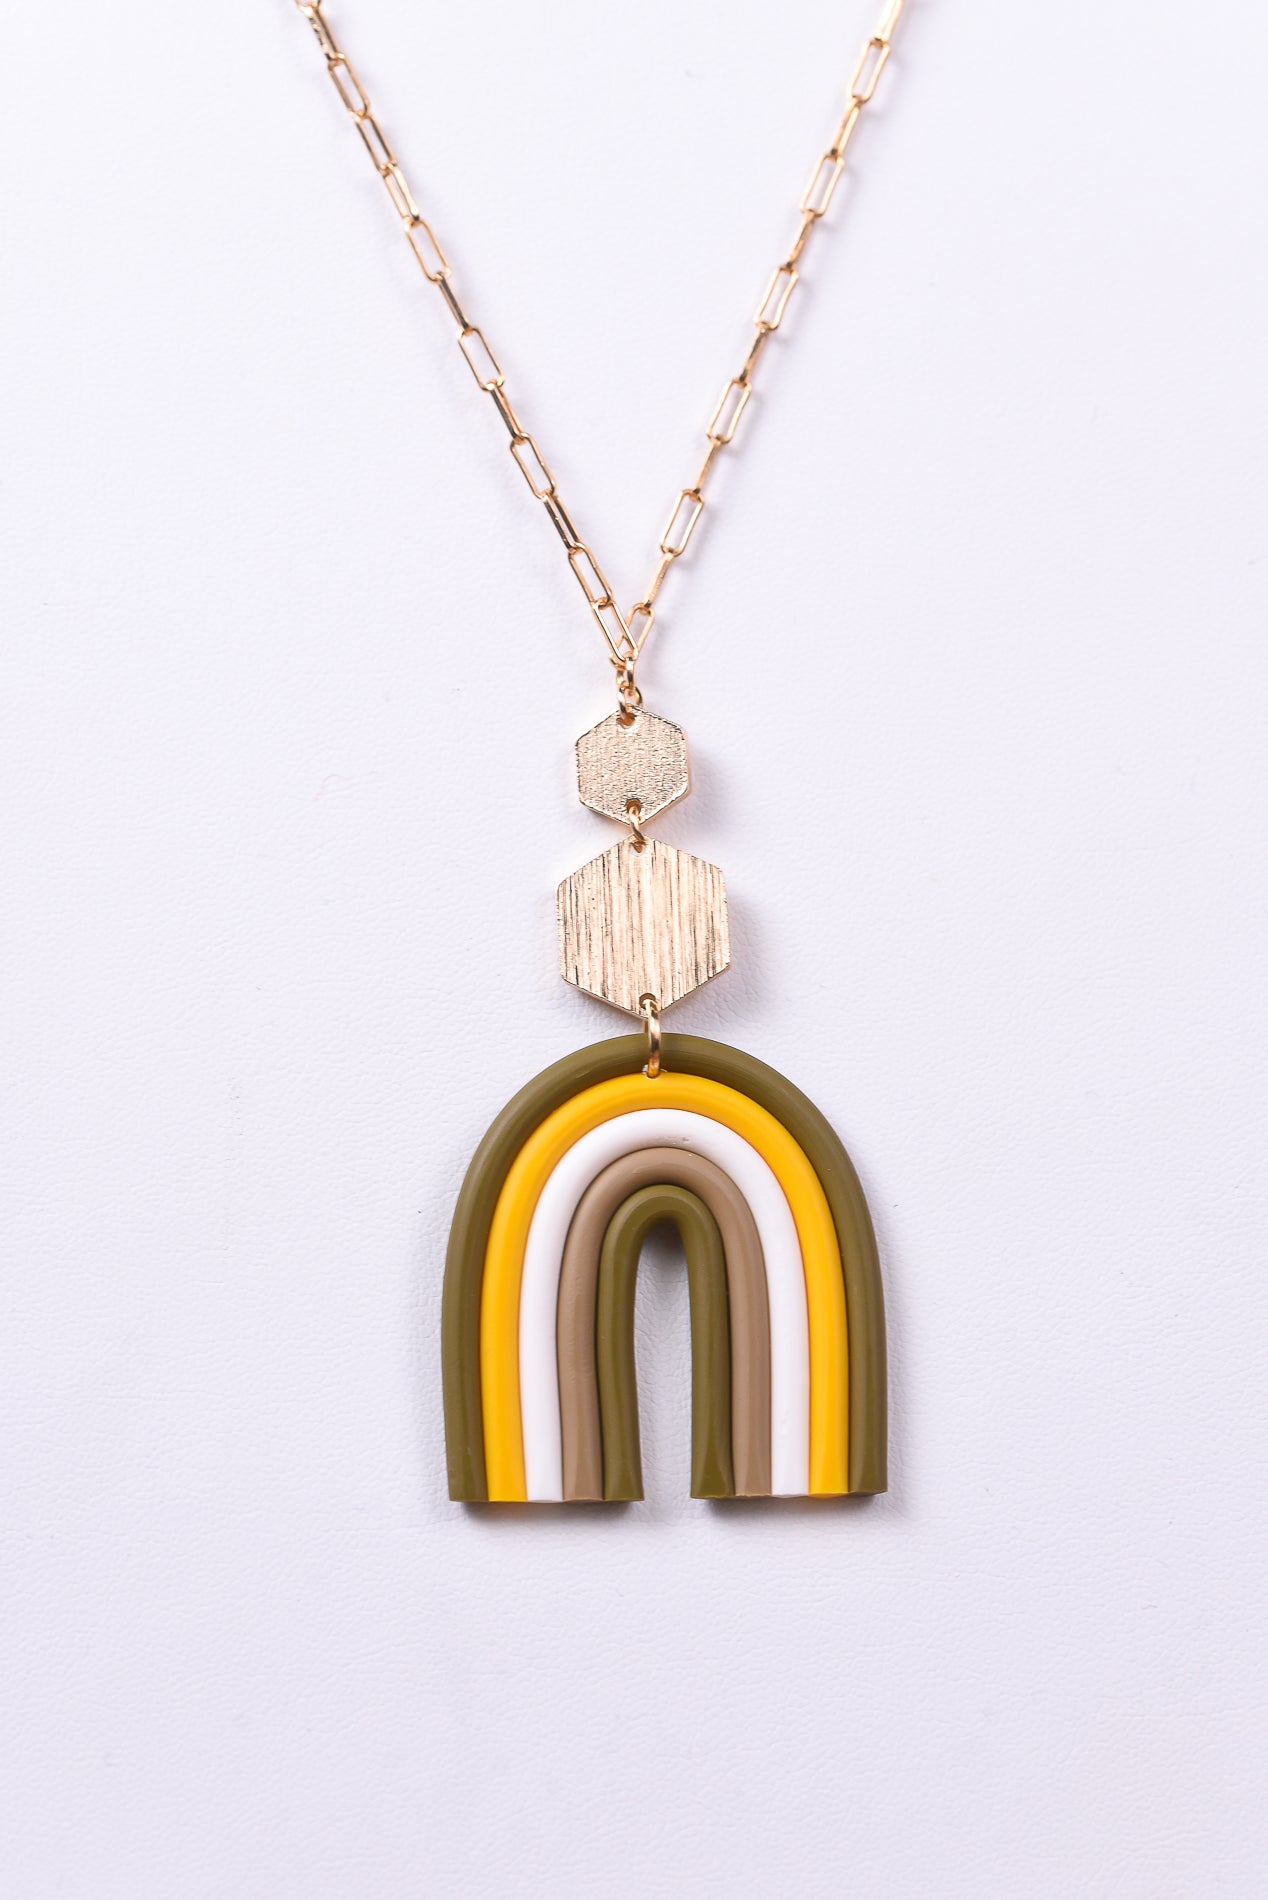 Gold/Yellow/Green/White/Hexagon Charm/Clay Arch Pendant Necklace - NEK4023GO